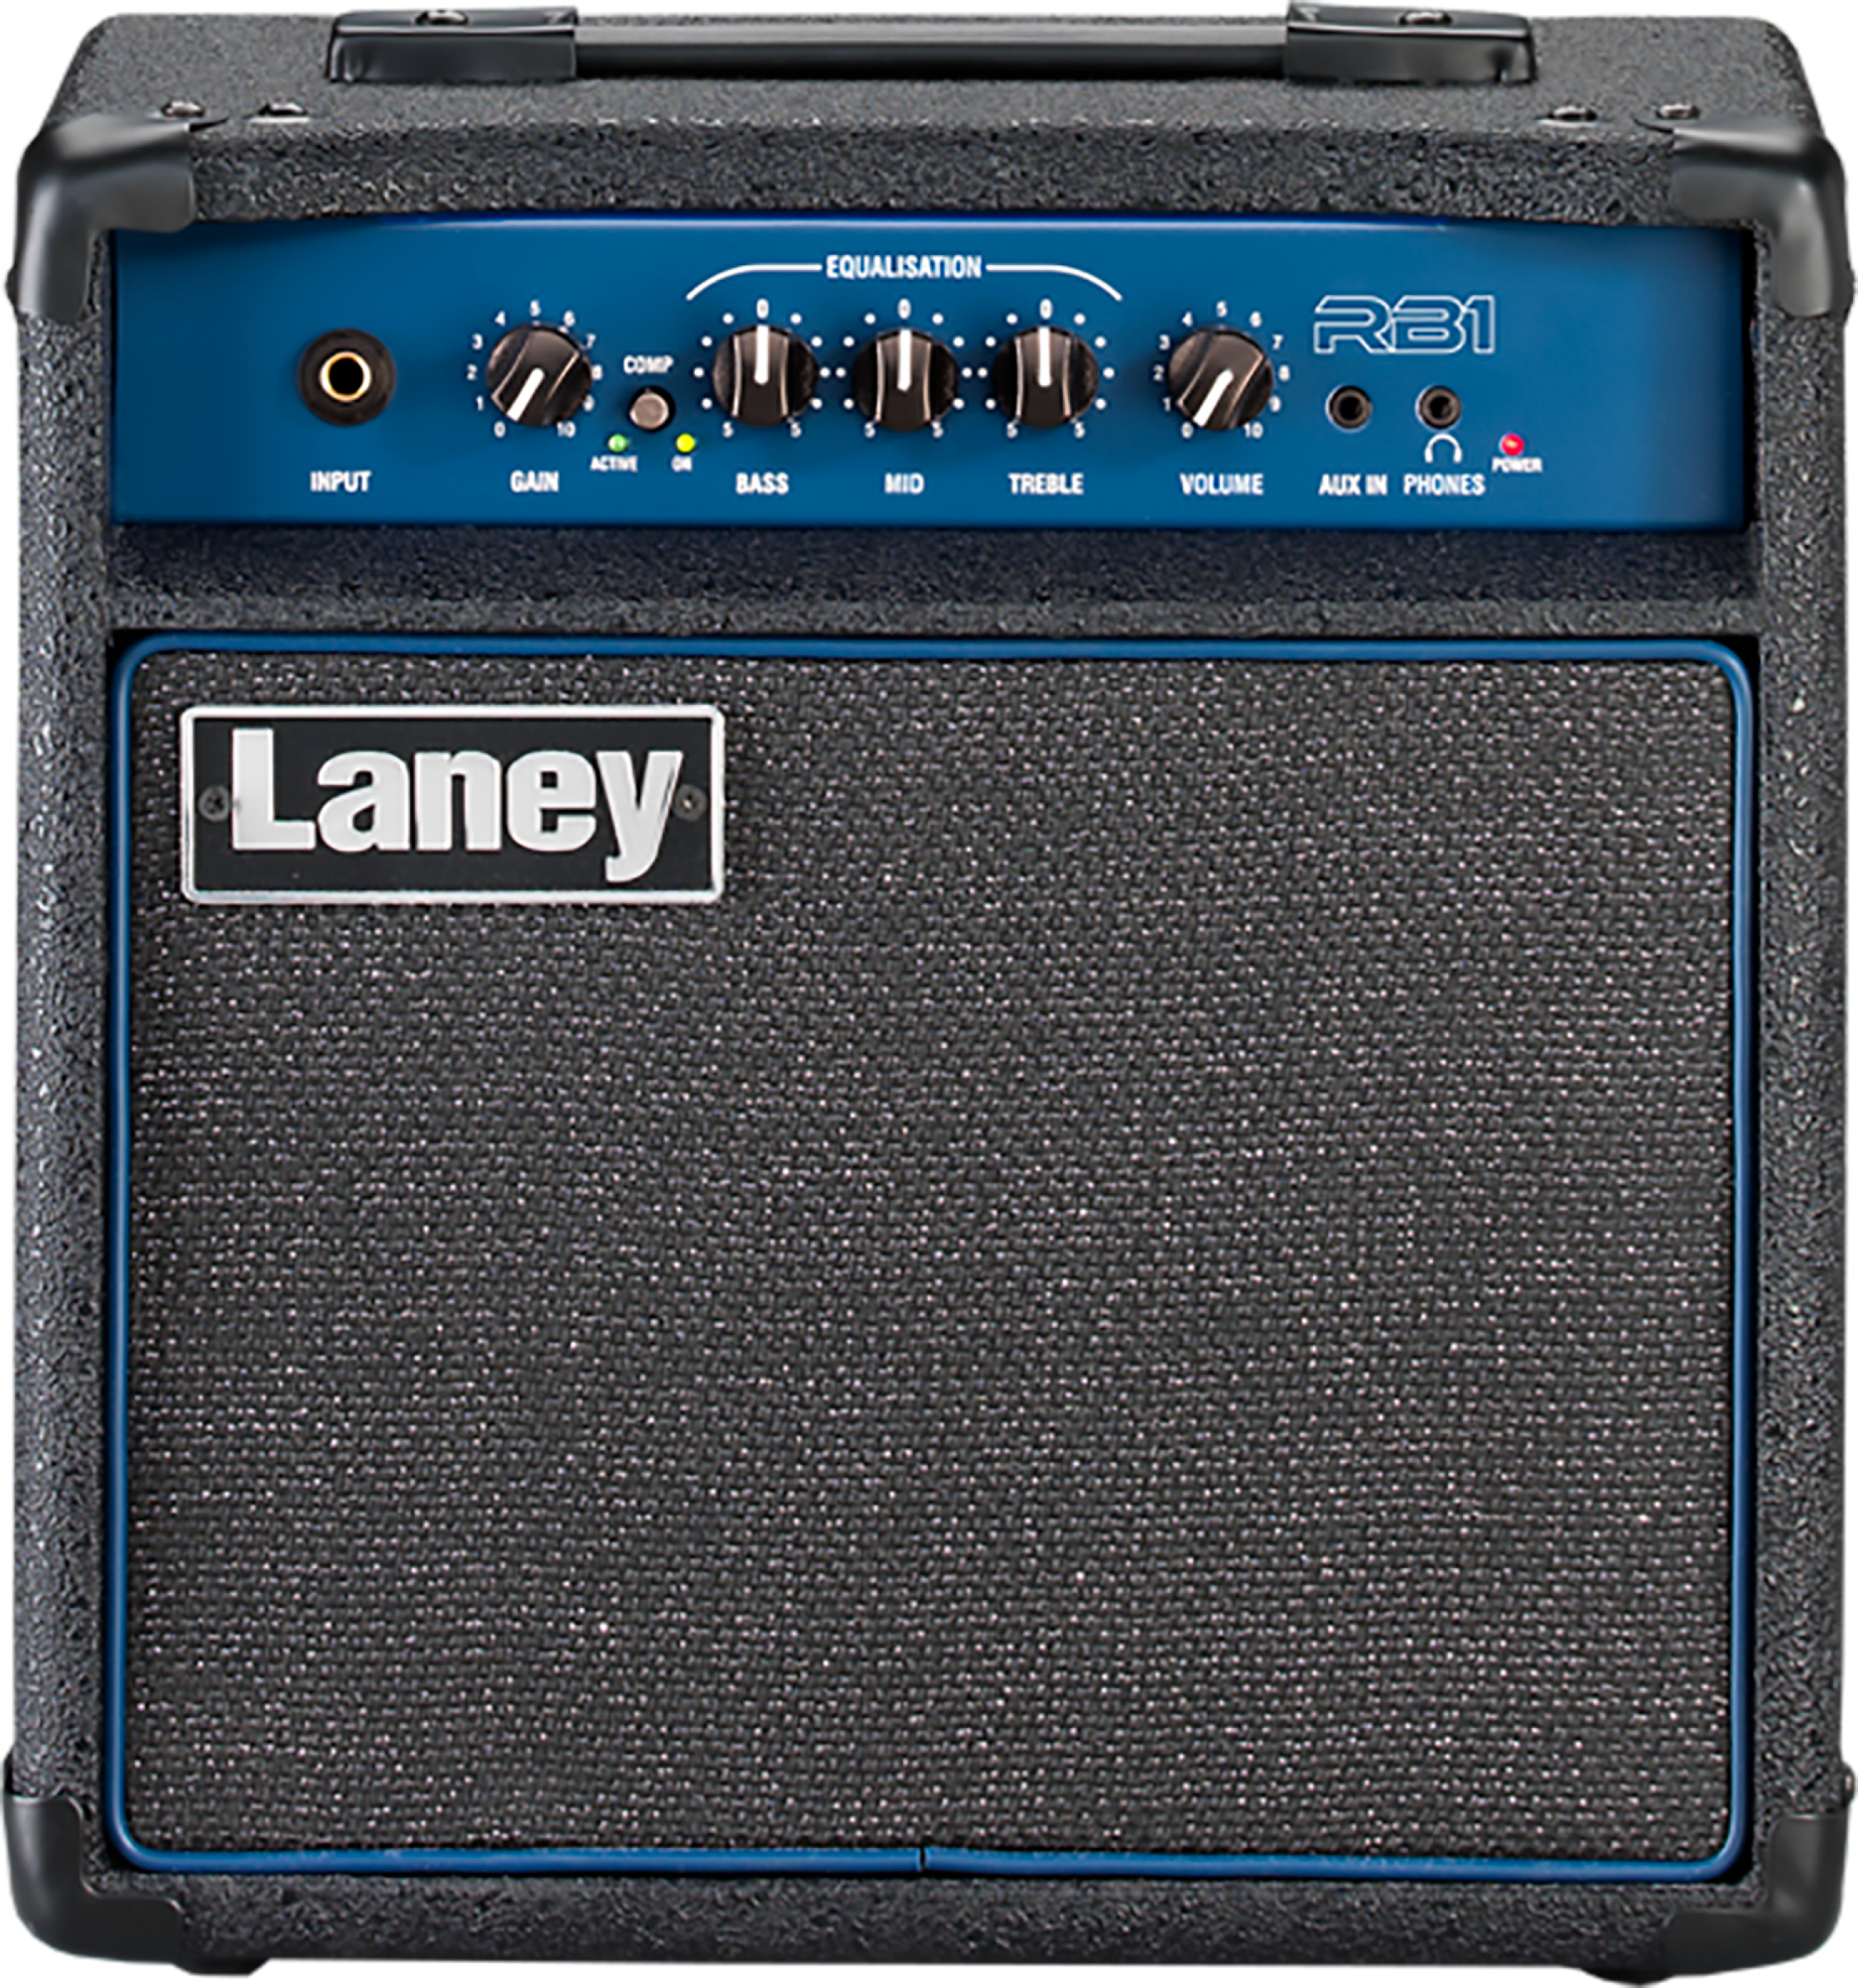 Laney Richter Rb1 15w 1x8 Black - Combo amplificador para bajo - Main picture